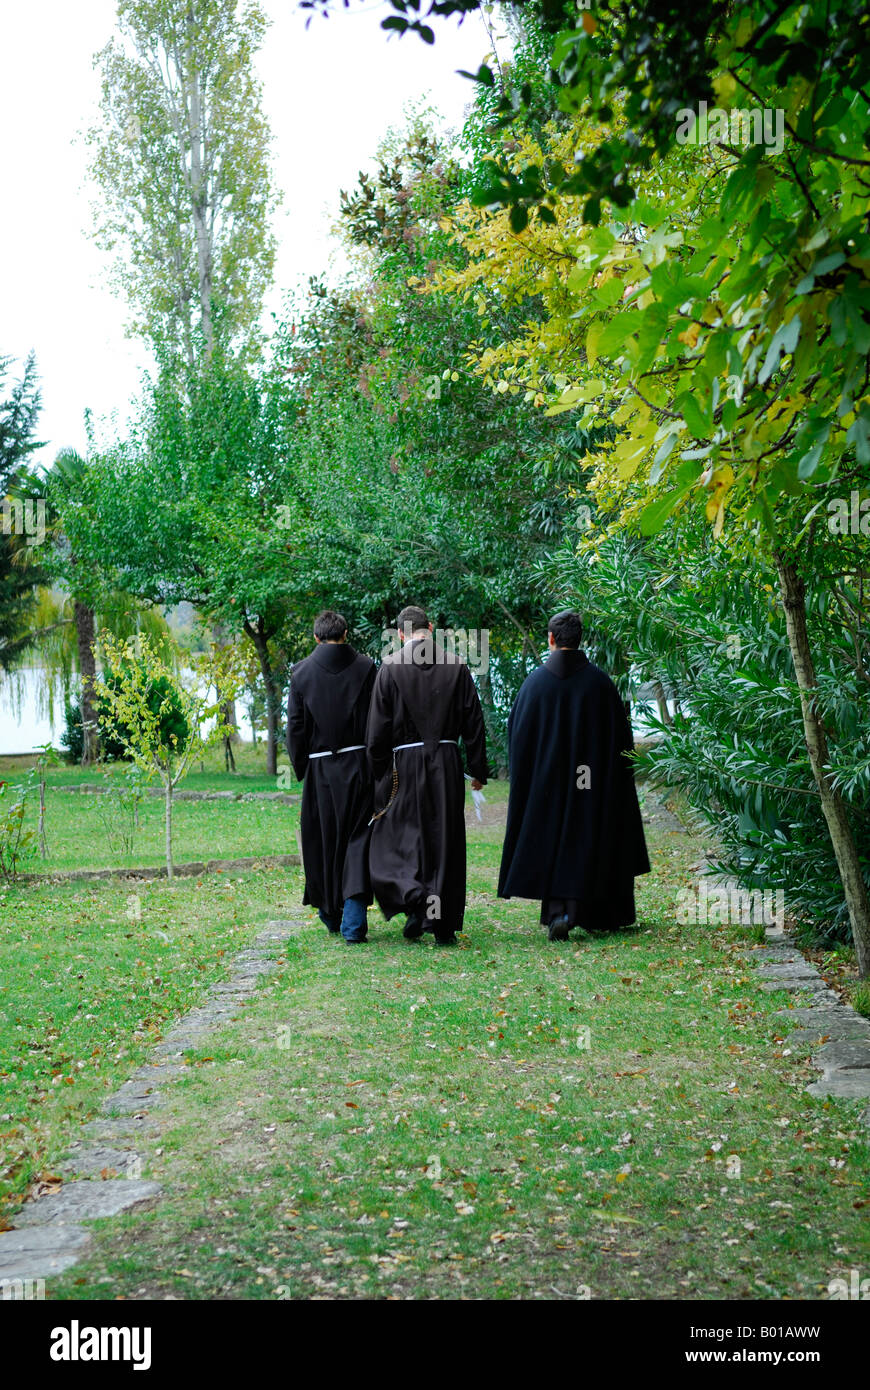 Monks walking away from camera, Krka Franciscan Monastery, island of Visovac, Krka National Park, Croatia Stock Photo